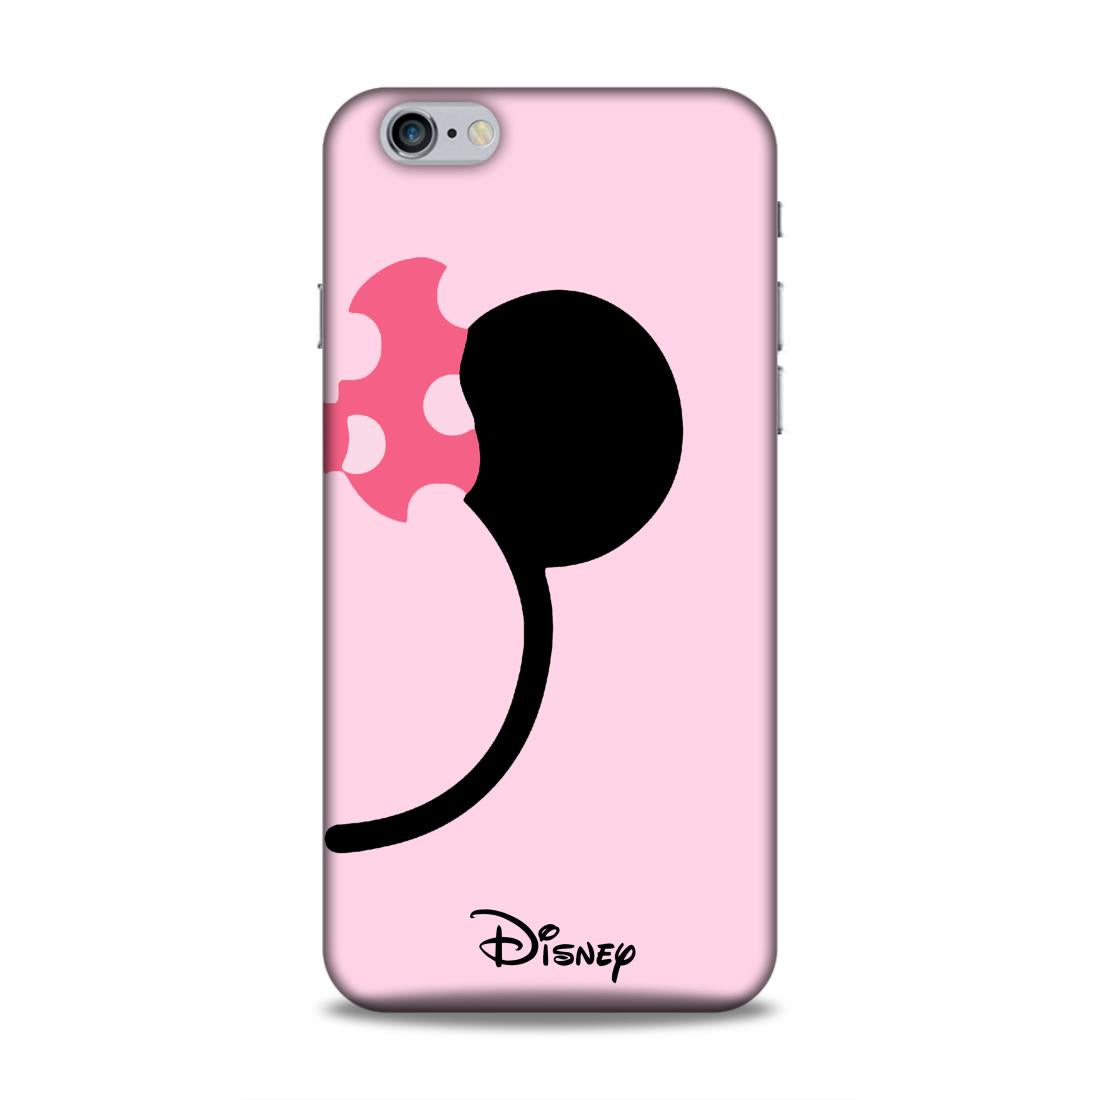 Disney Hard Back Case For Apple iPhone 6 Plus / 6s Plus